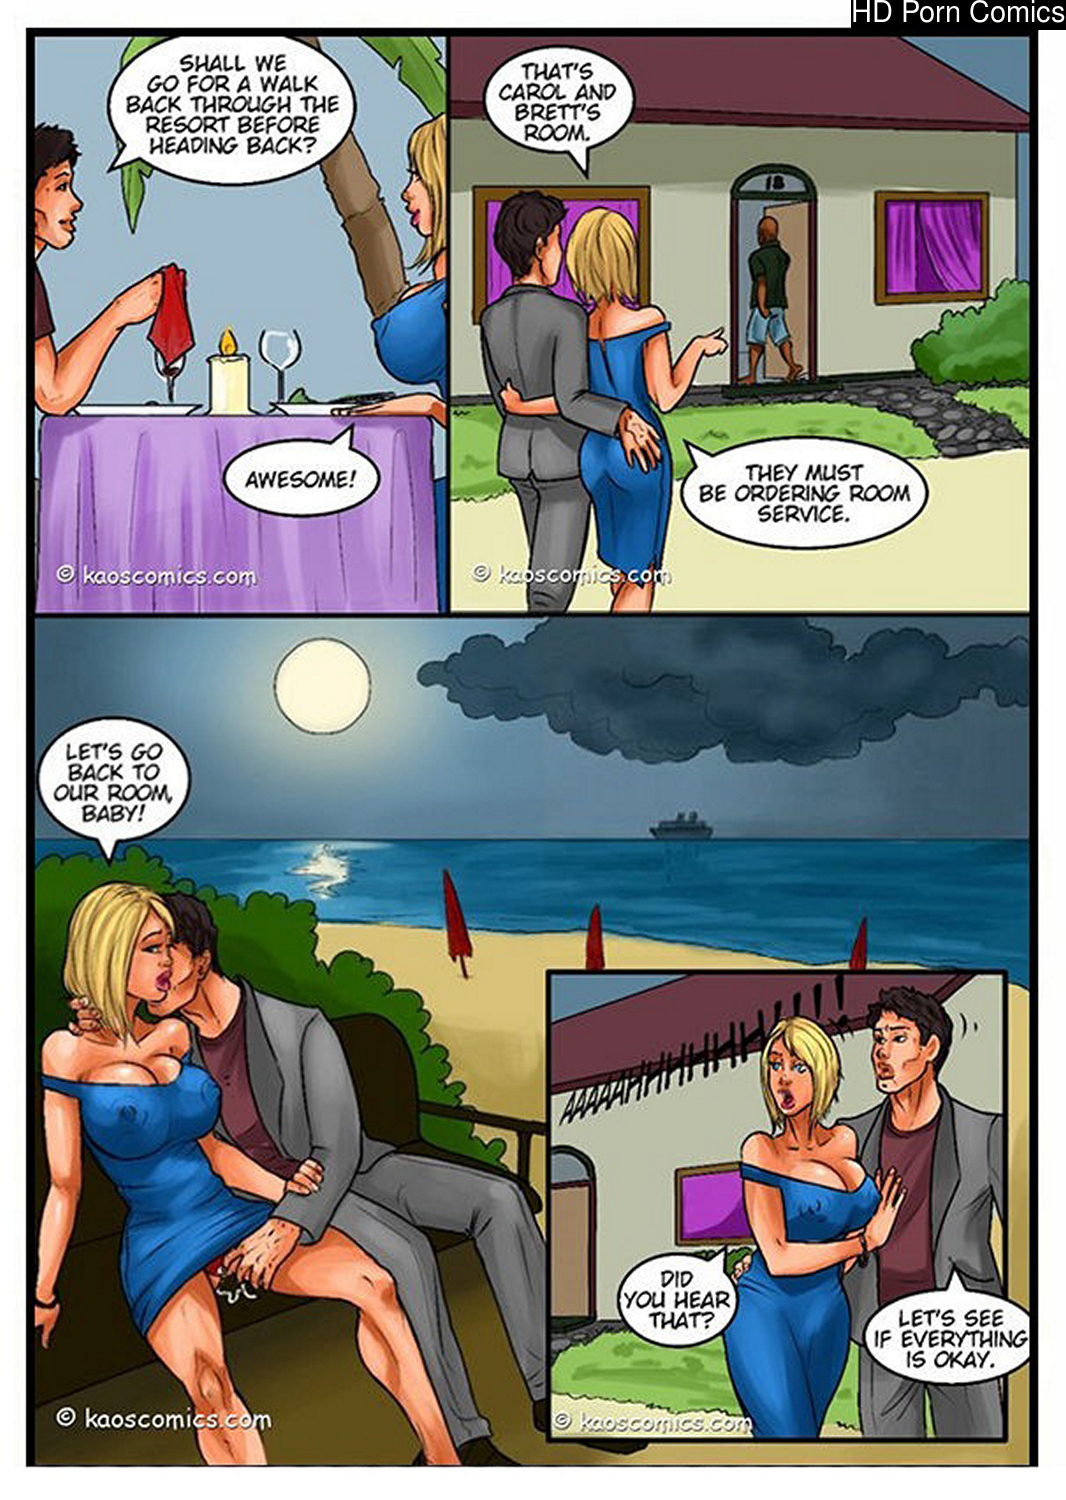 Massage Cartoon Porn - The Massage comic porn - HD Porn Comics